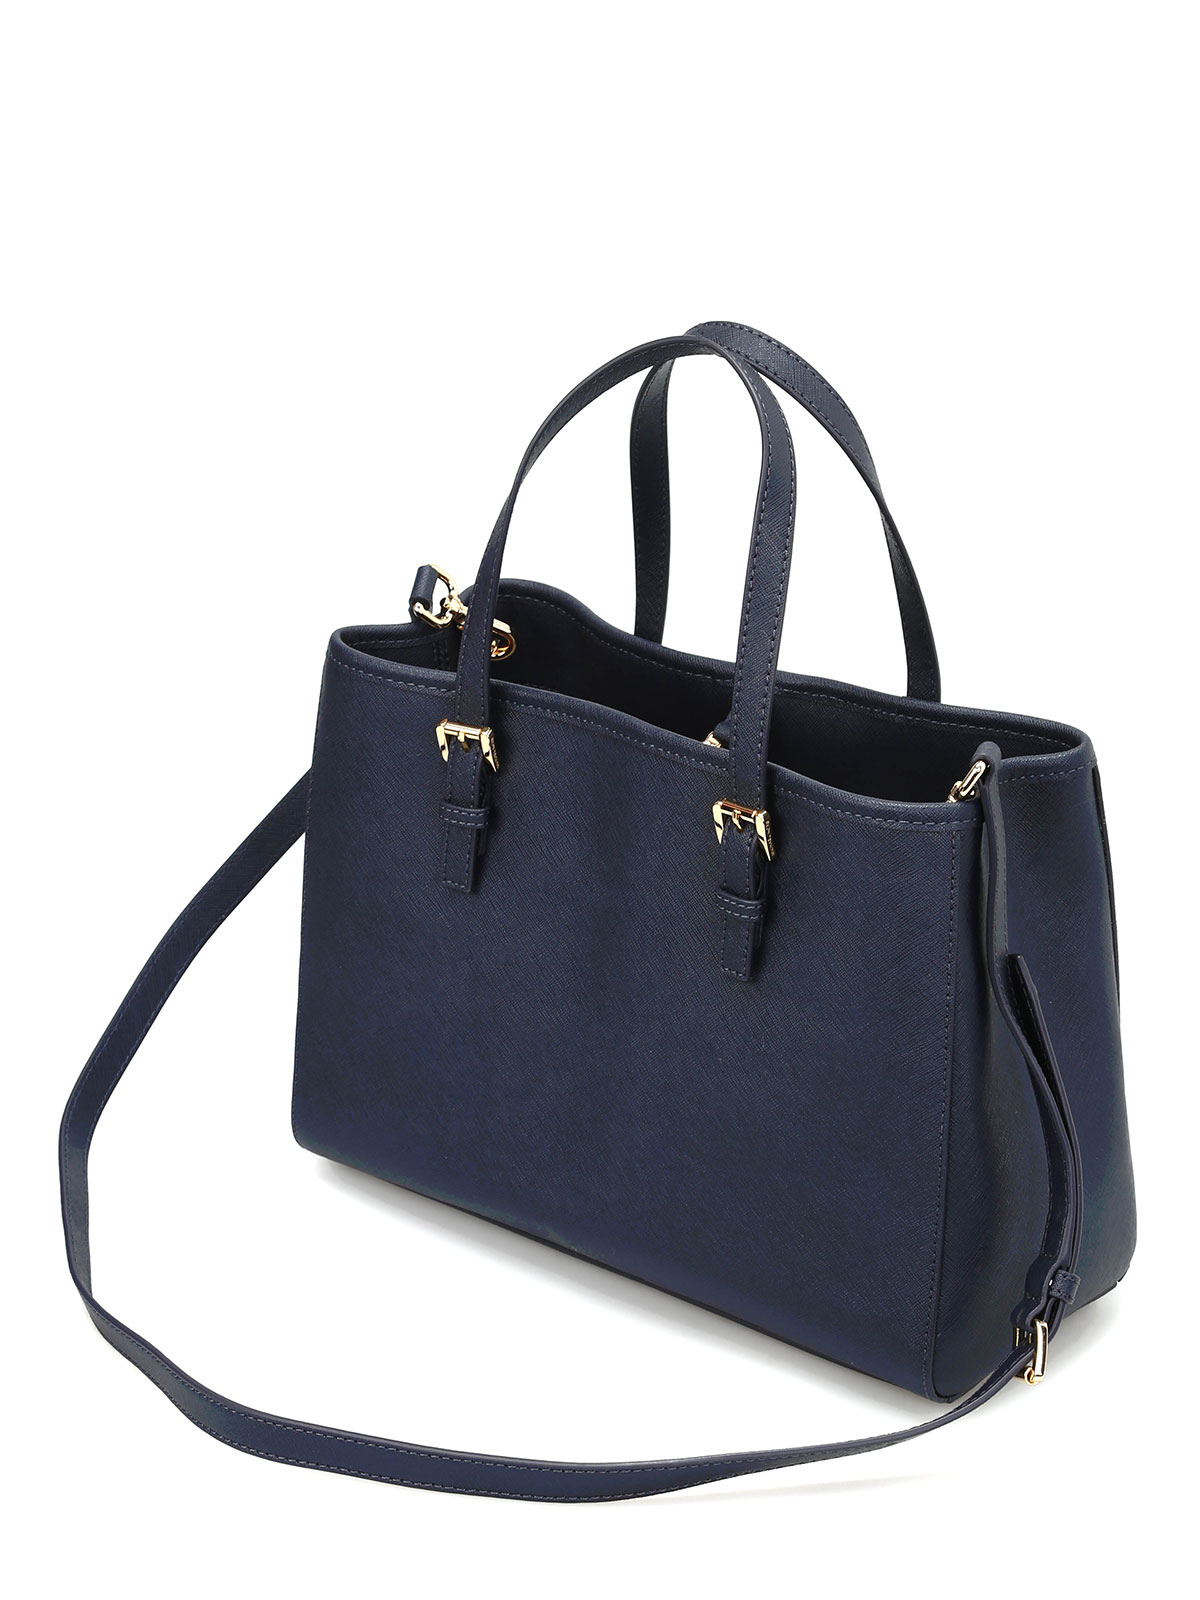 Genuine MICHAEL KORS Navy blue Saffiano Leather Tote Bag Handbag- Great